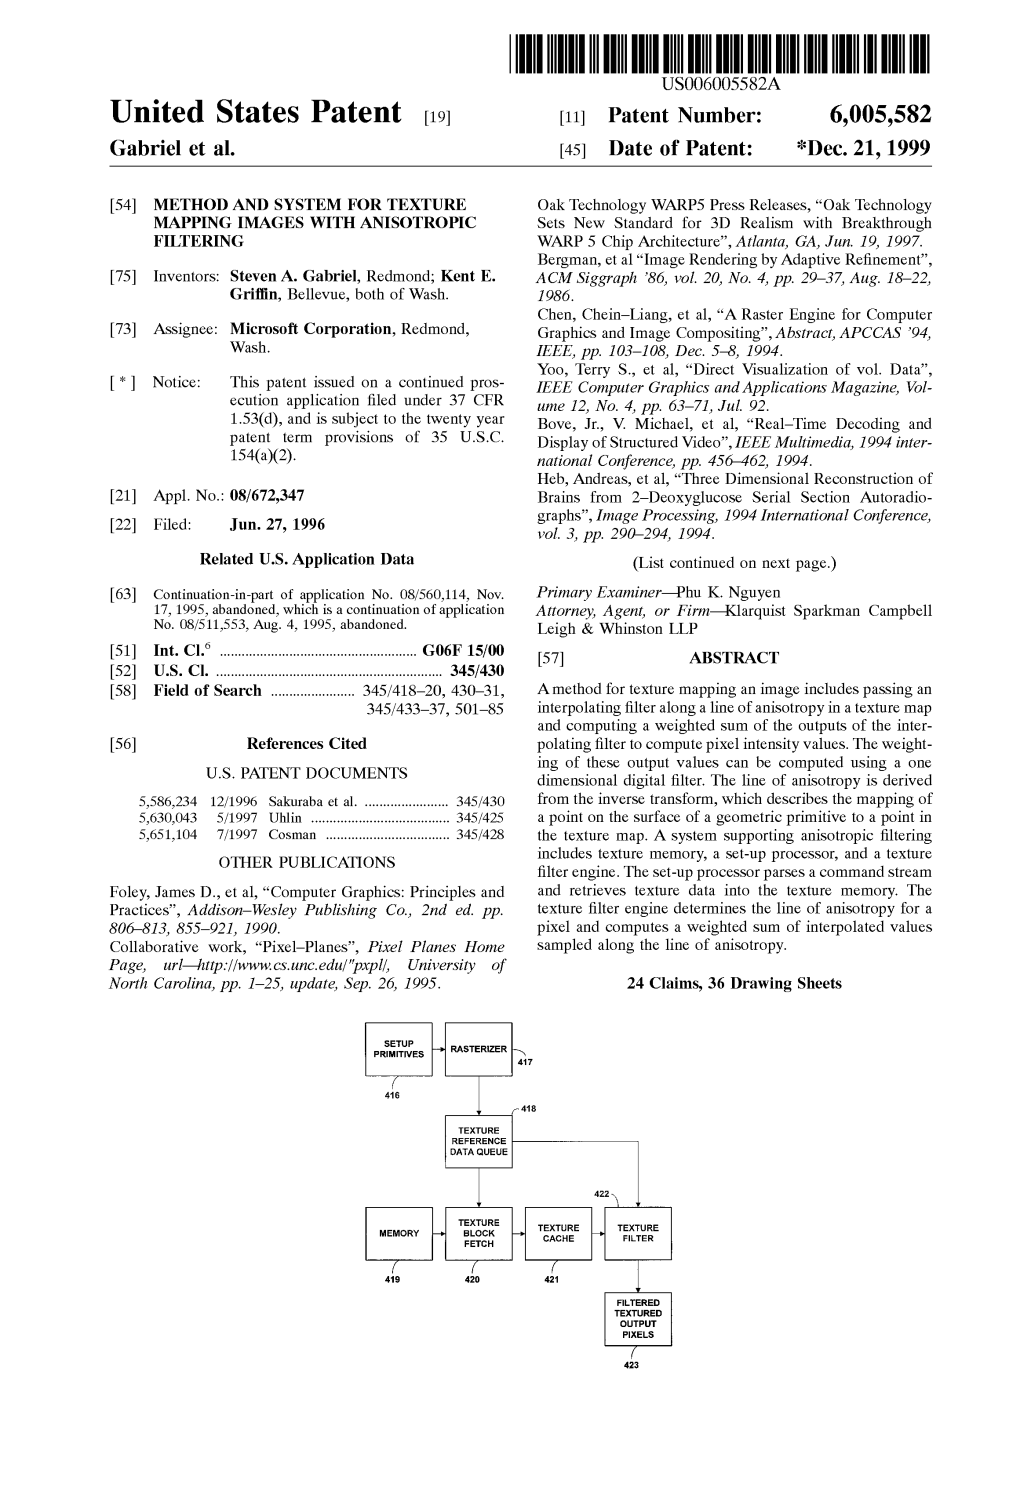 United States Patent 19 11 Patent Number: 6,005,582 Gabriel Et Al